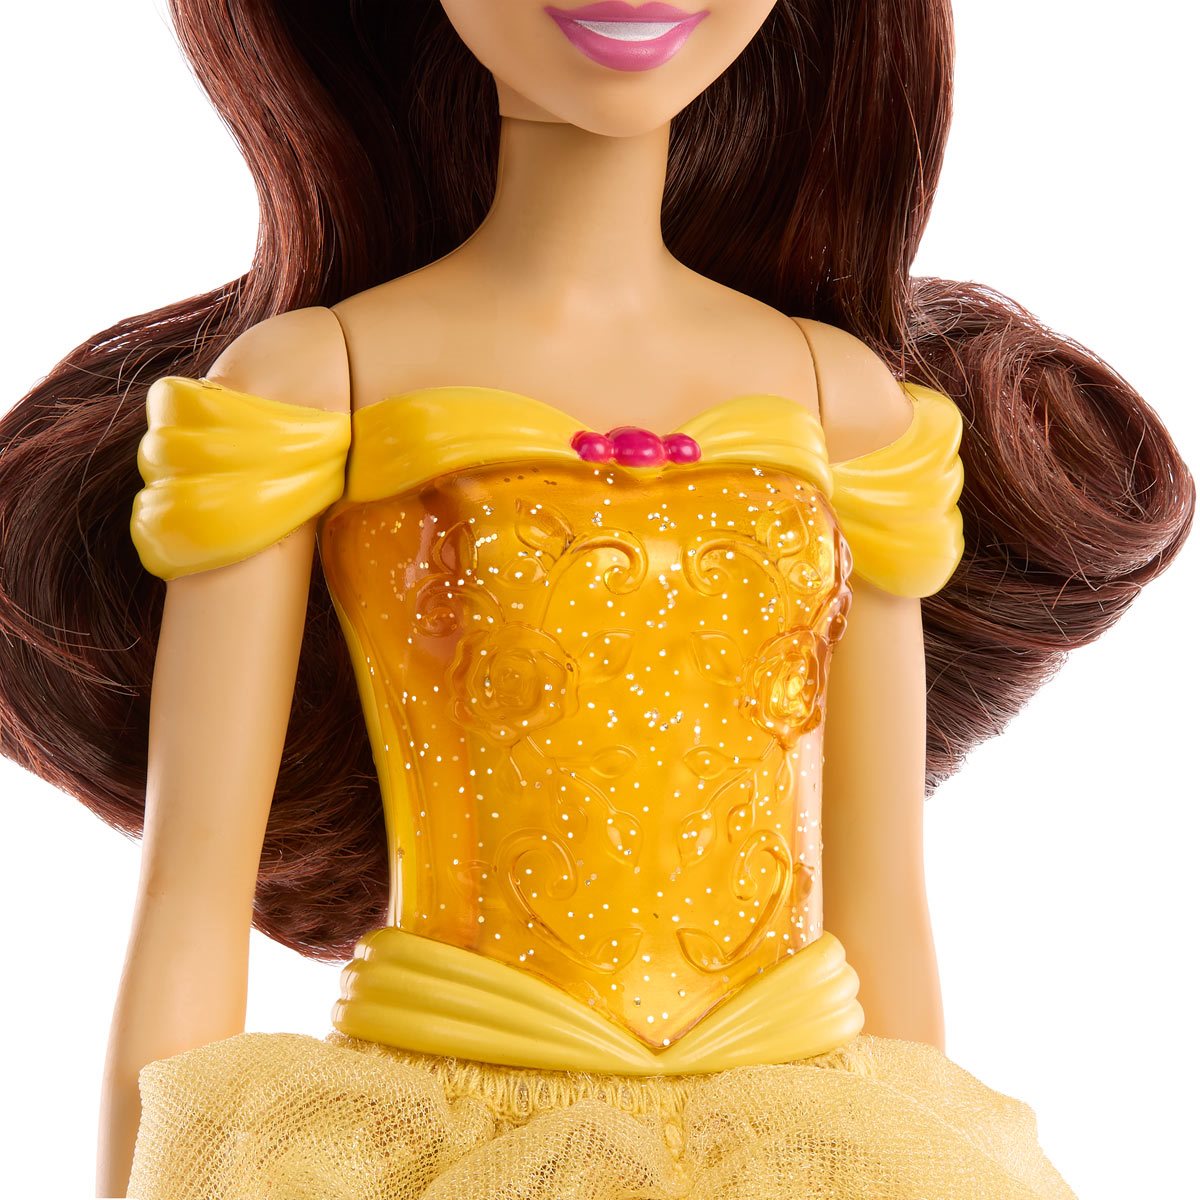 Disney Princess Belle Doll - Entertainment Earth